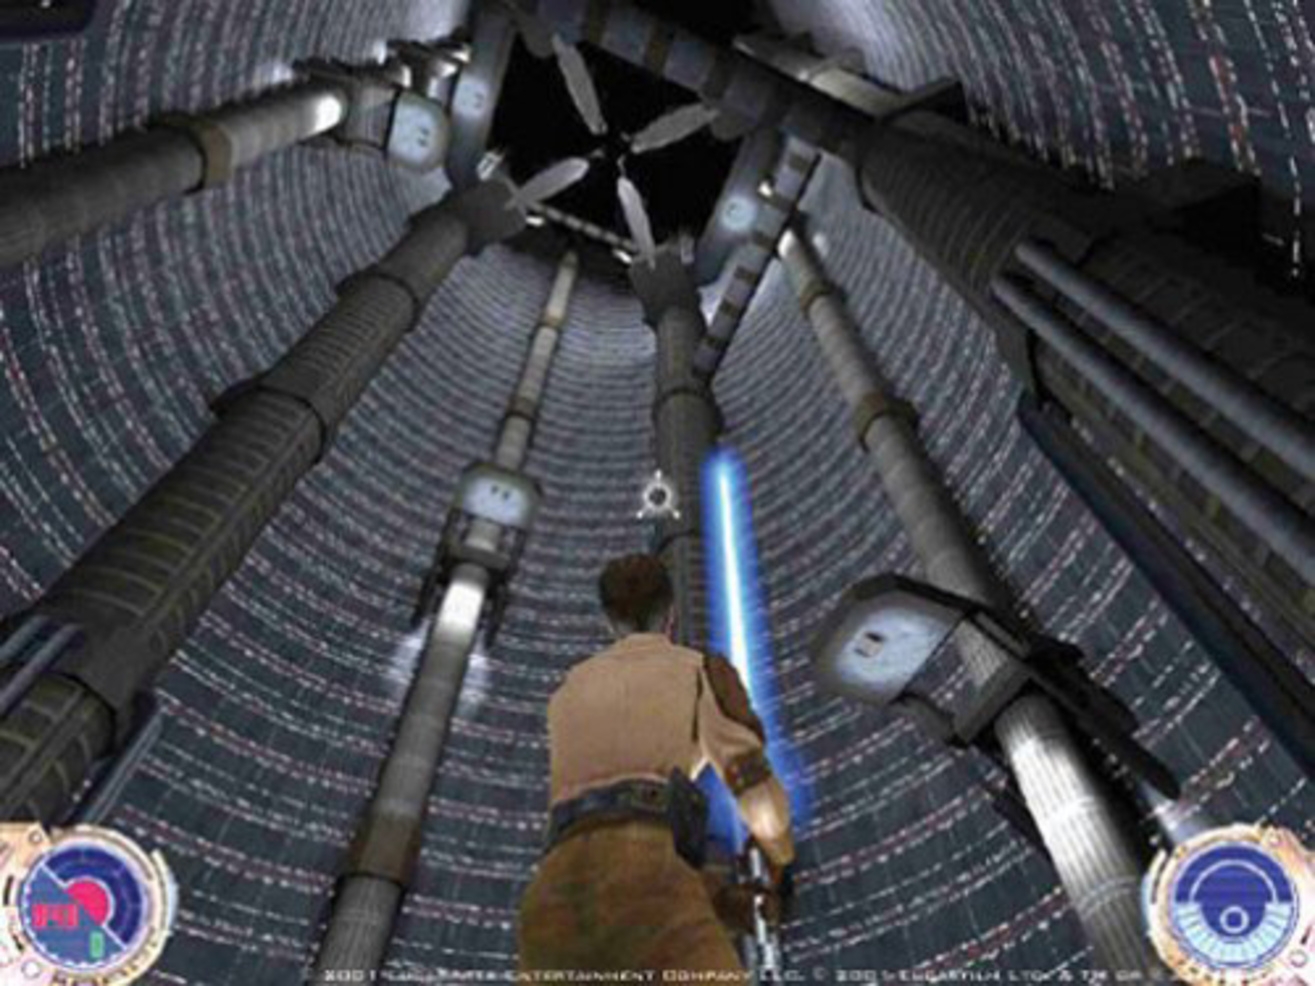 Star Wars: Jedi Knight II - Jedi Outcast (PC)